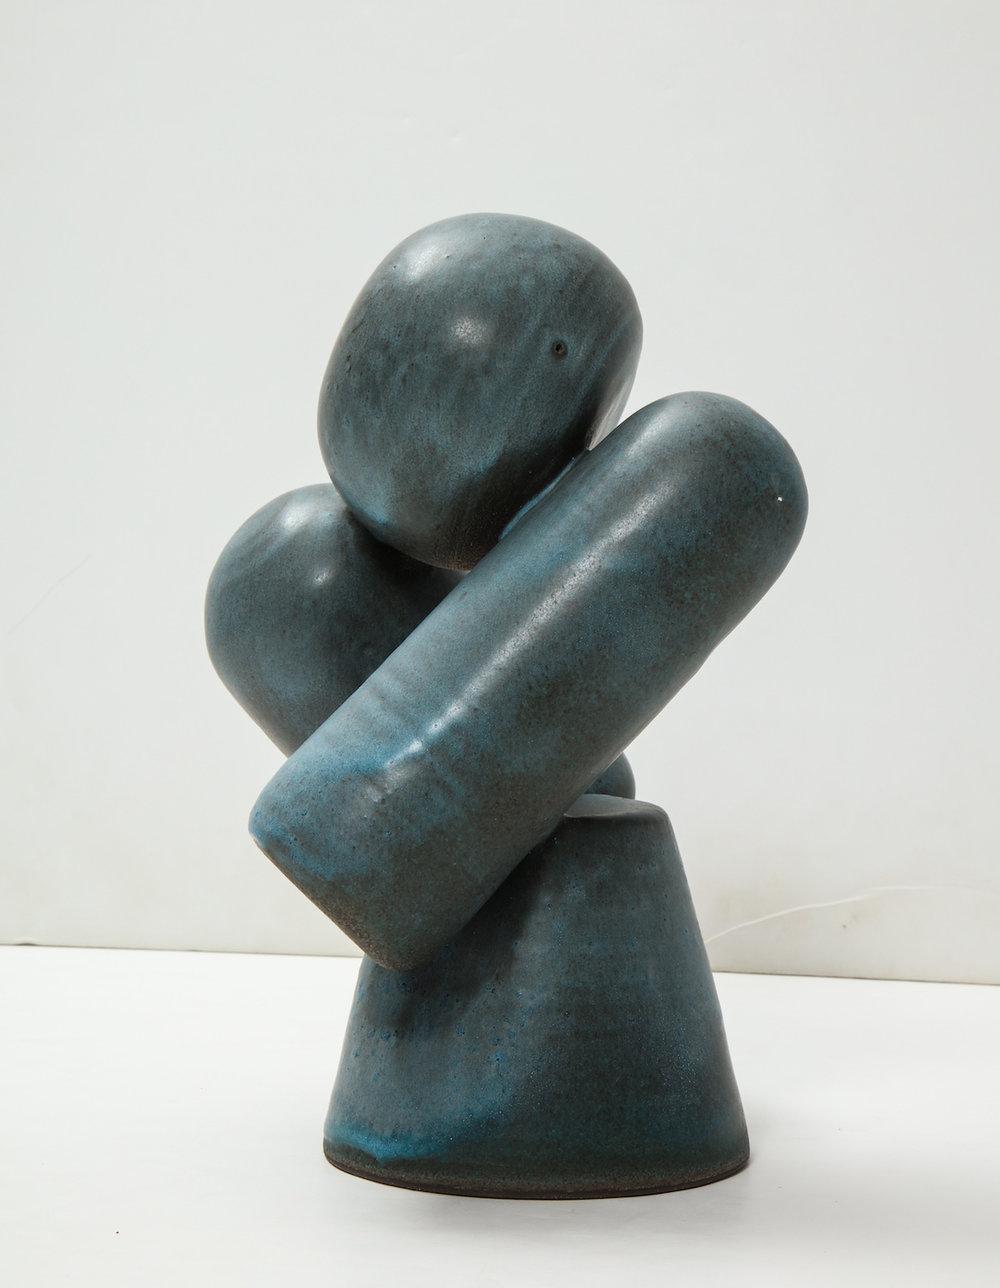 Glazed 4-Piece Assemblage Sculpture #1 by David Haskell